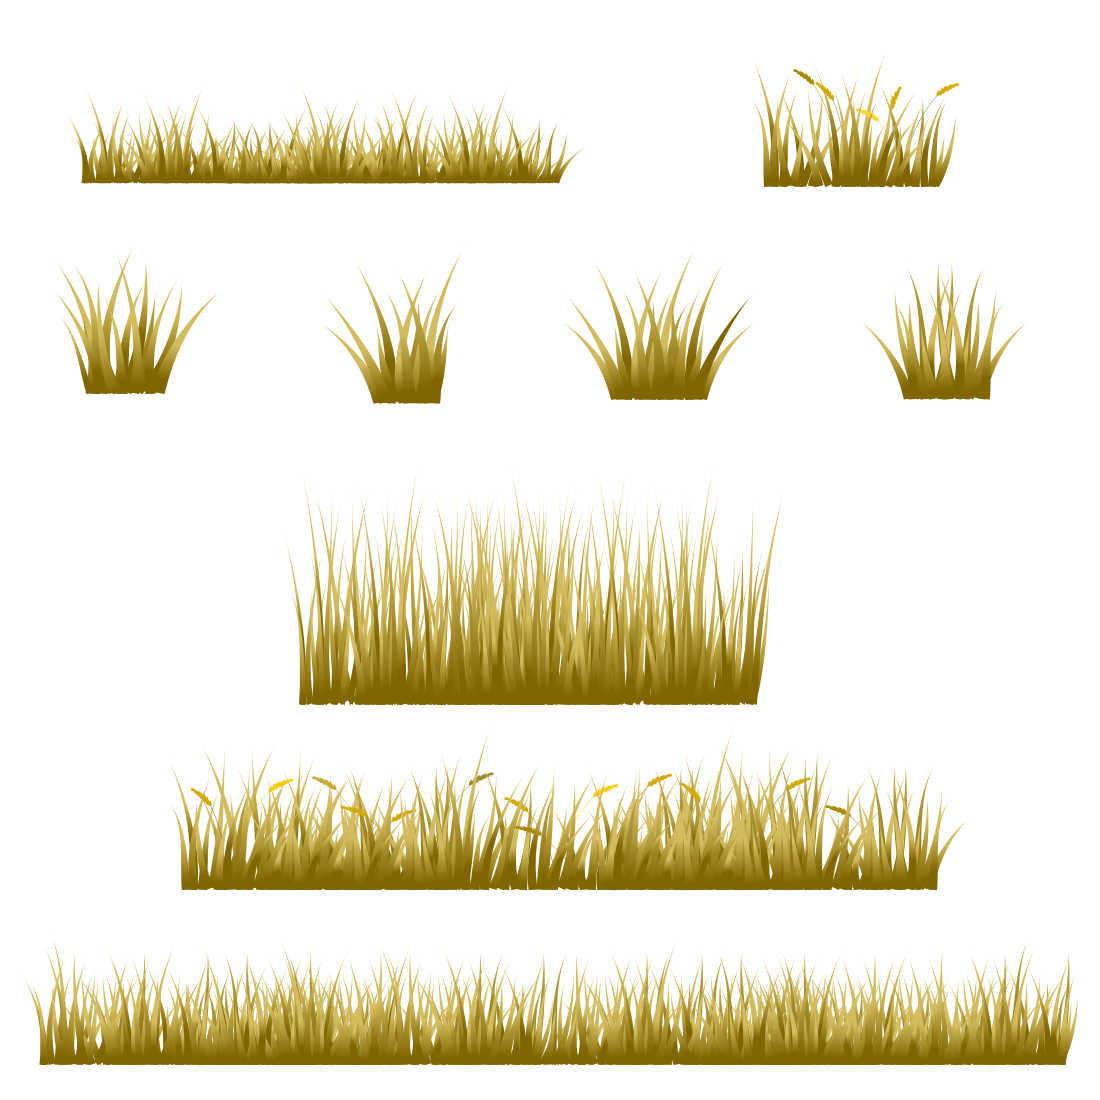 Brown Grass, Reeds Grass set for Illustration.